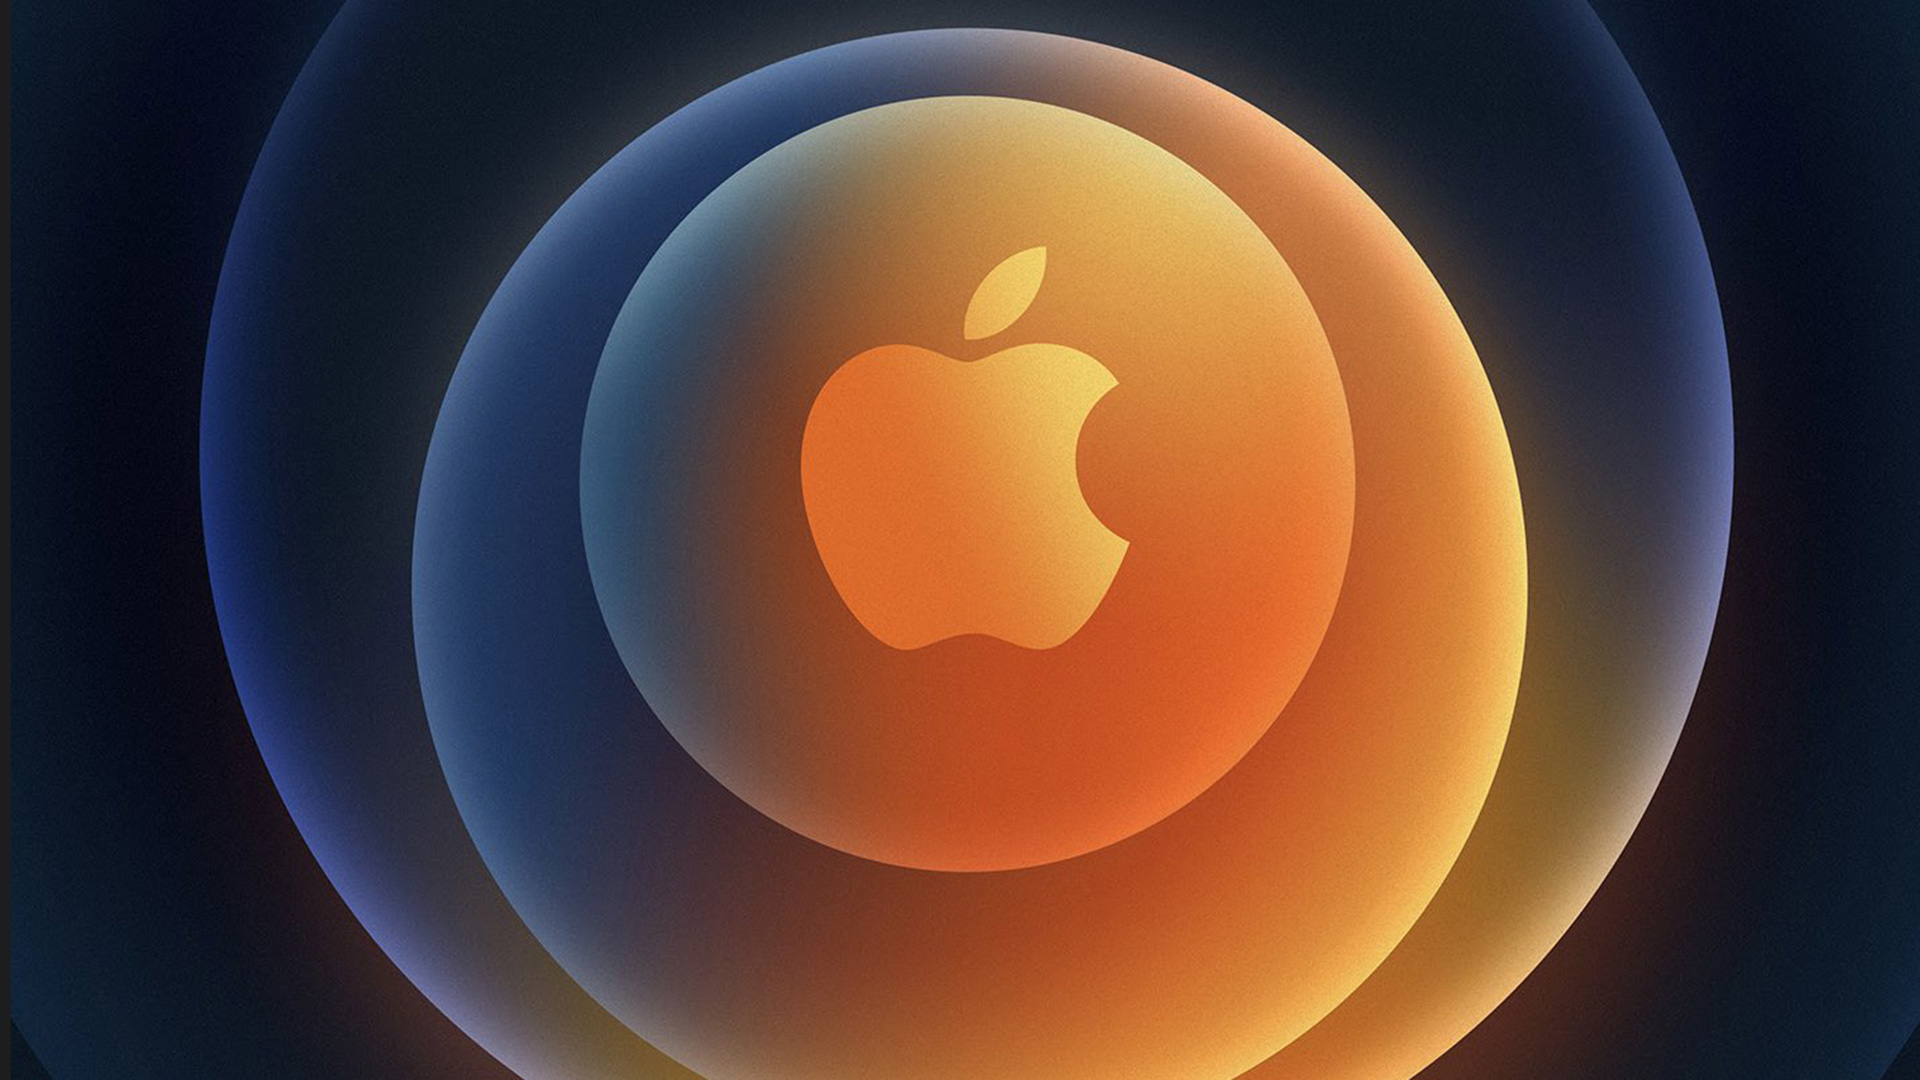 Официально: iPhone 12 будет представлен на презентации Apple 13 октября